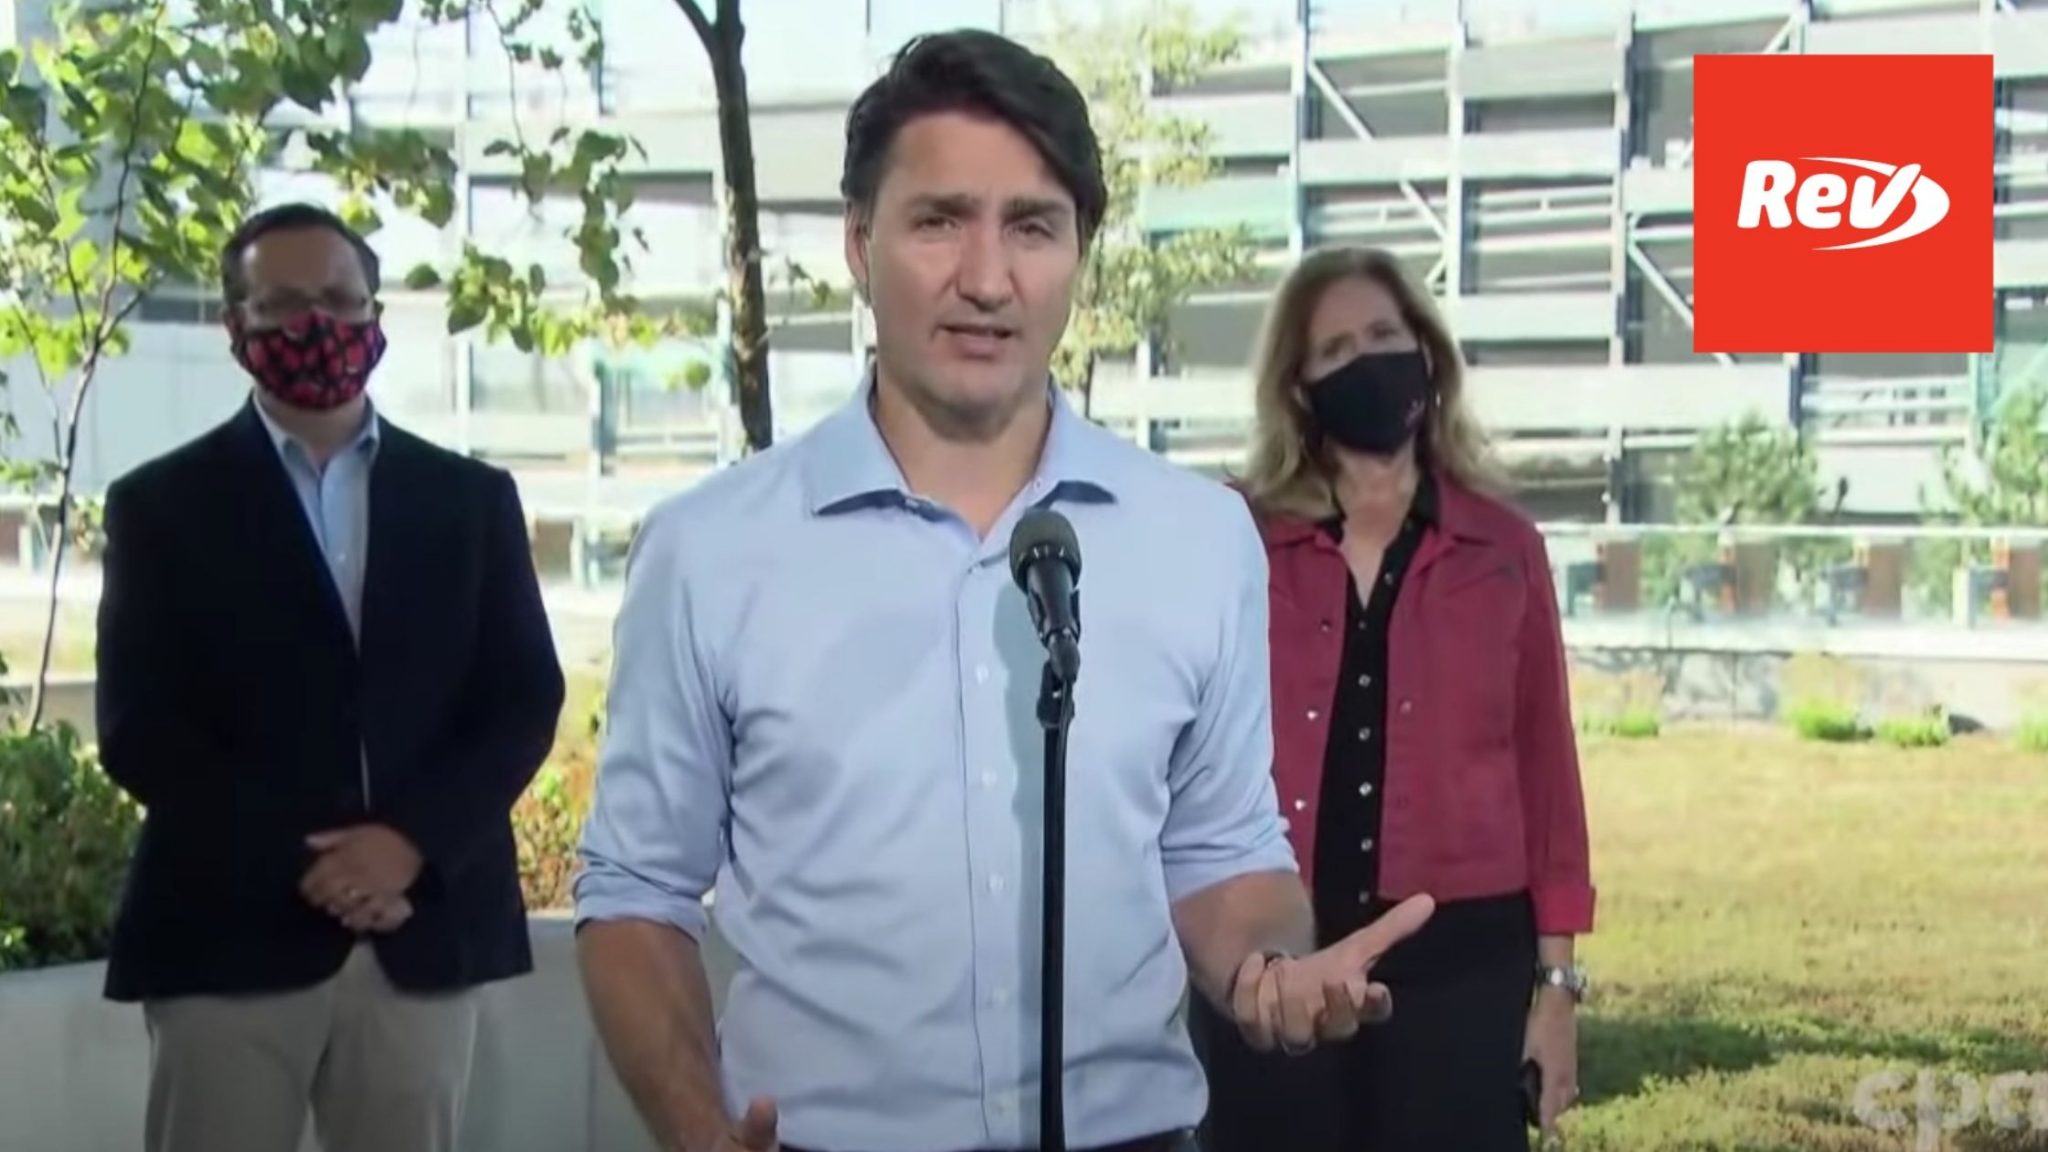 Canada PM Justin Trudeau Campaign Speech Transcript: Vaccine Program, Gun Laws, Housing